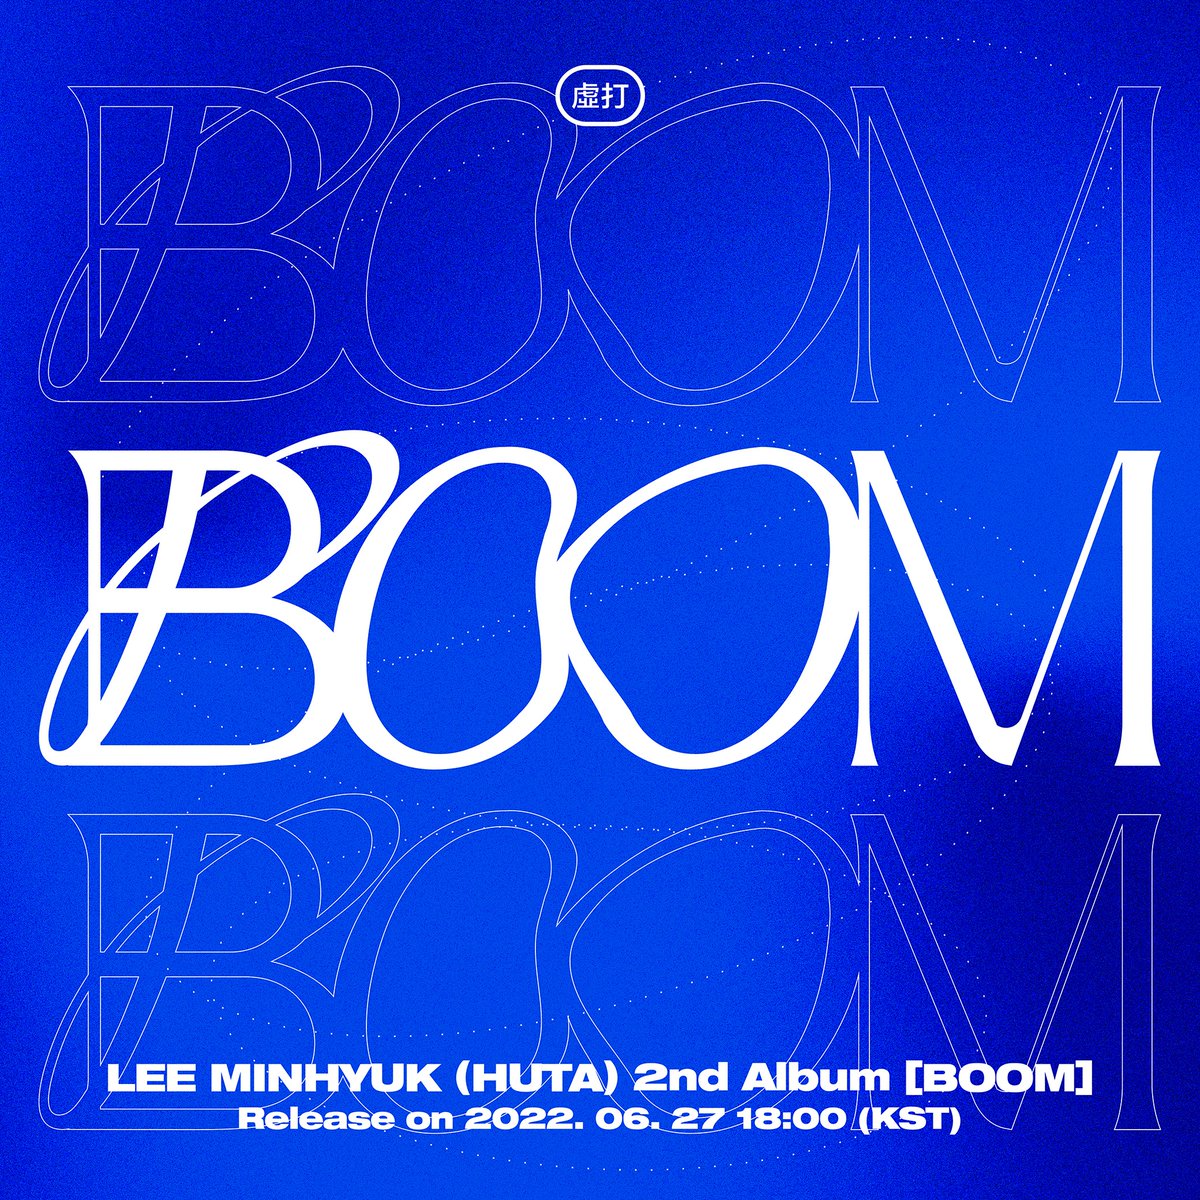 LEE MINHYUK (HUTA) 2nd Album
[BOOM] 
 
2022.06.27 18:00 (KST)
Coming Soon 💥

#이민혁 #LEE_MINHYUK #HUTA
#BOOM #HUTA_BOOM